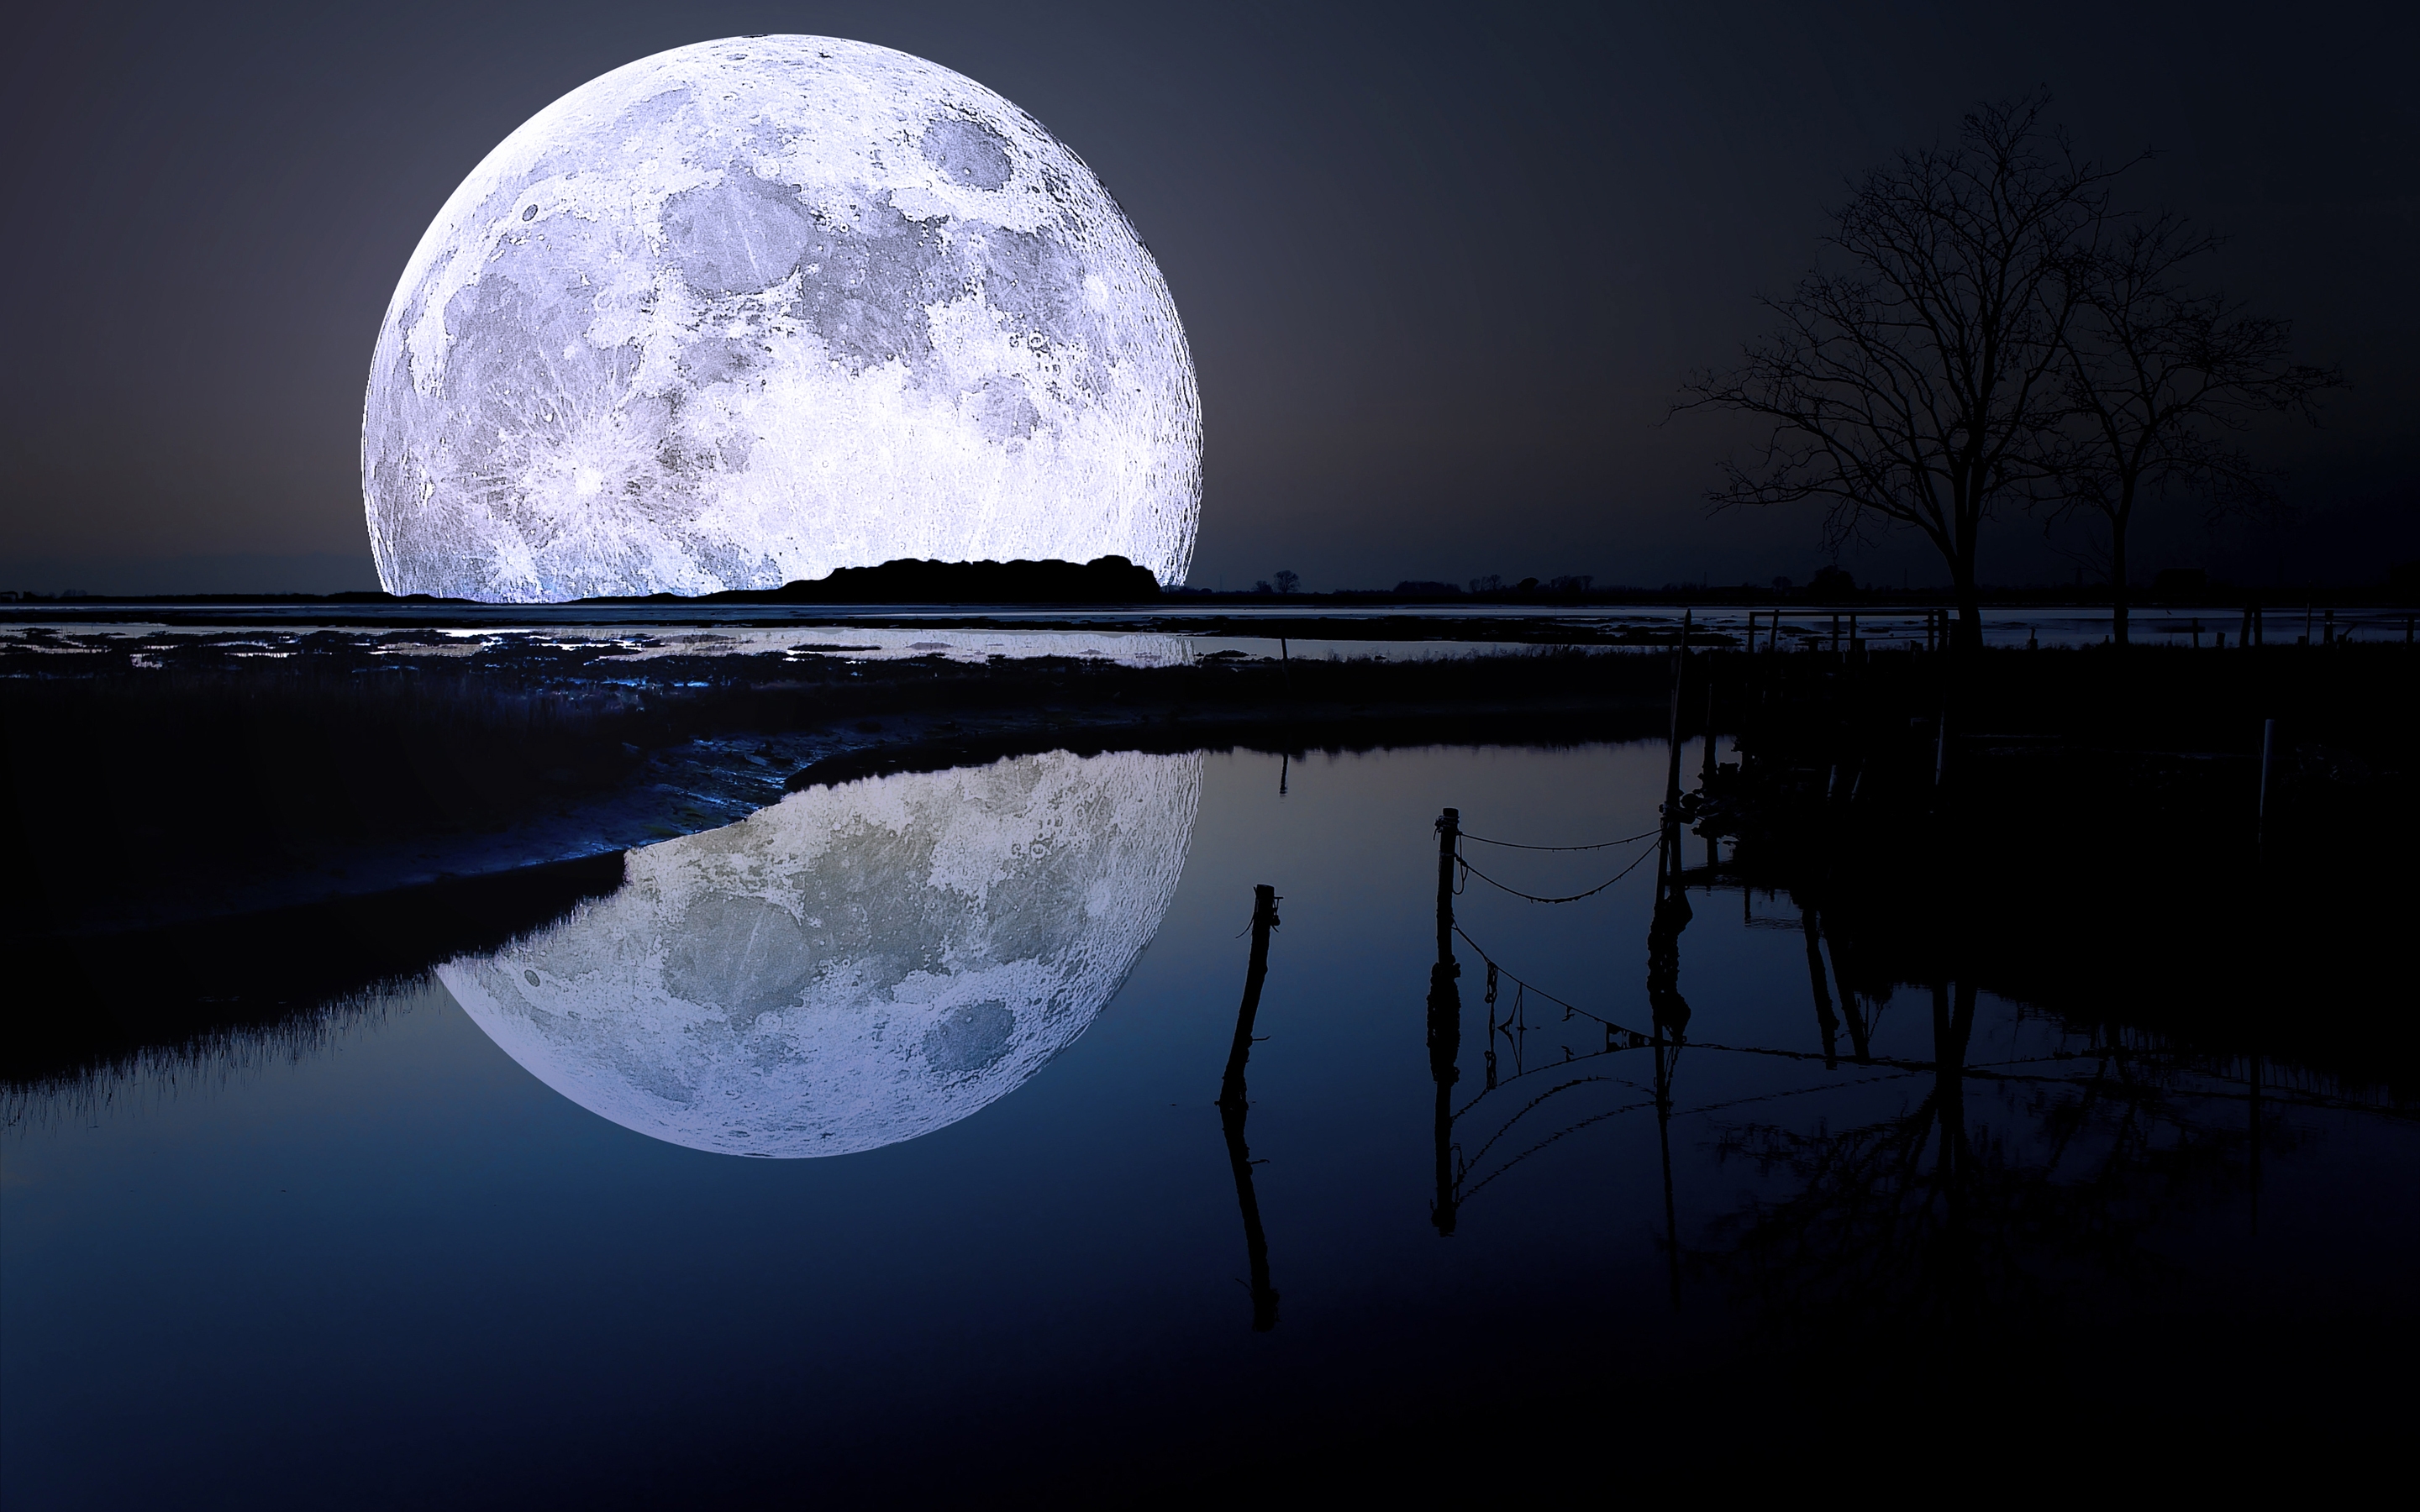 Moon Reflection for 2880 x 1800 Retina Display resolution